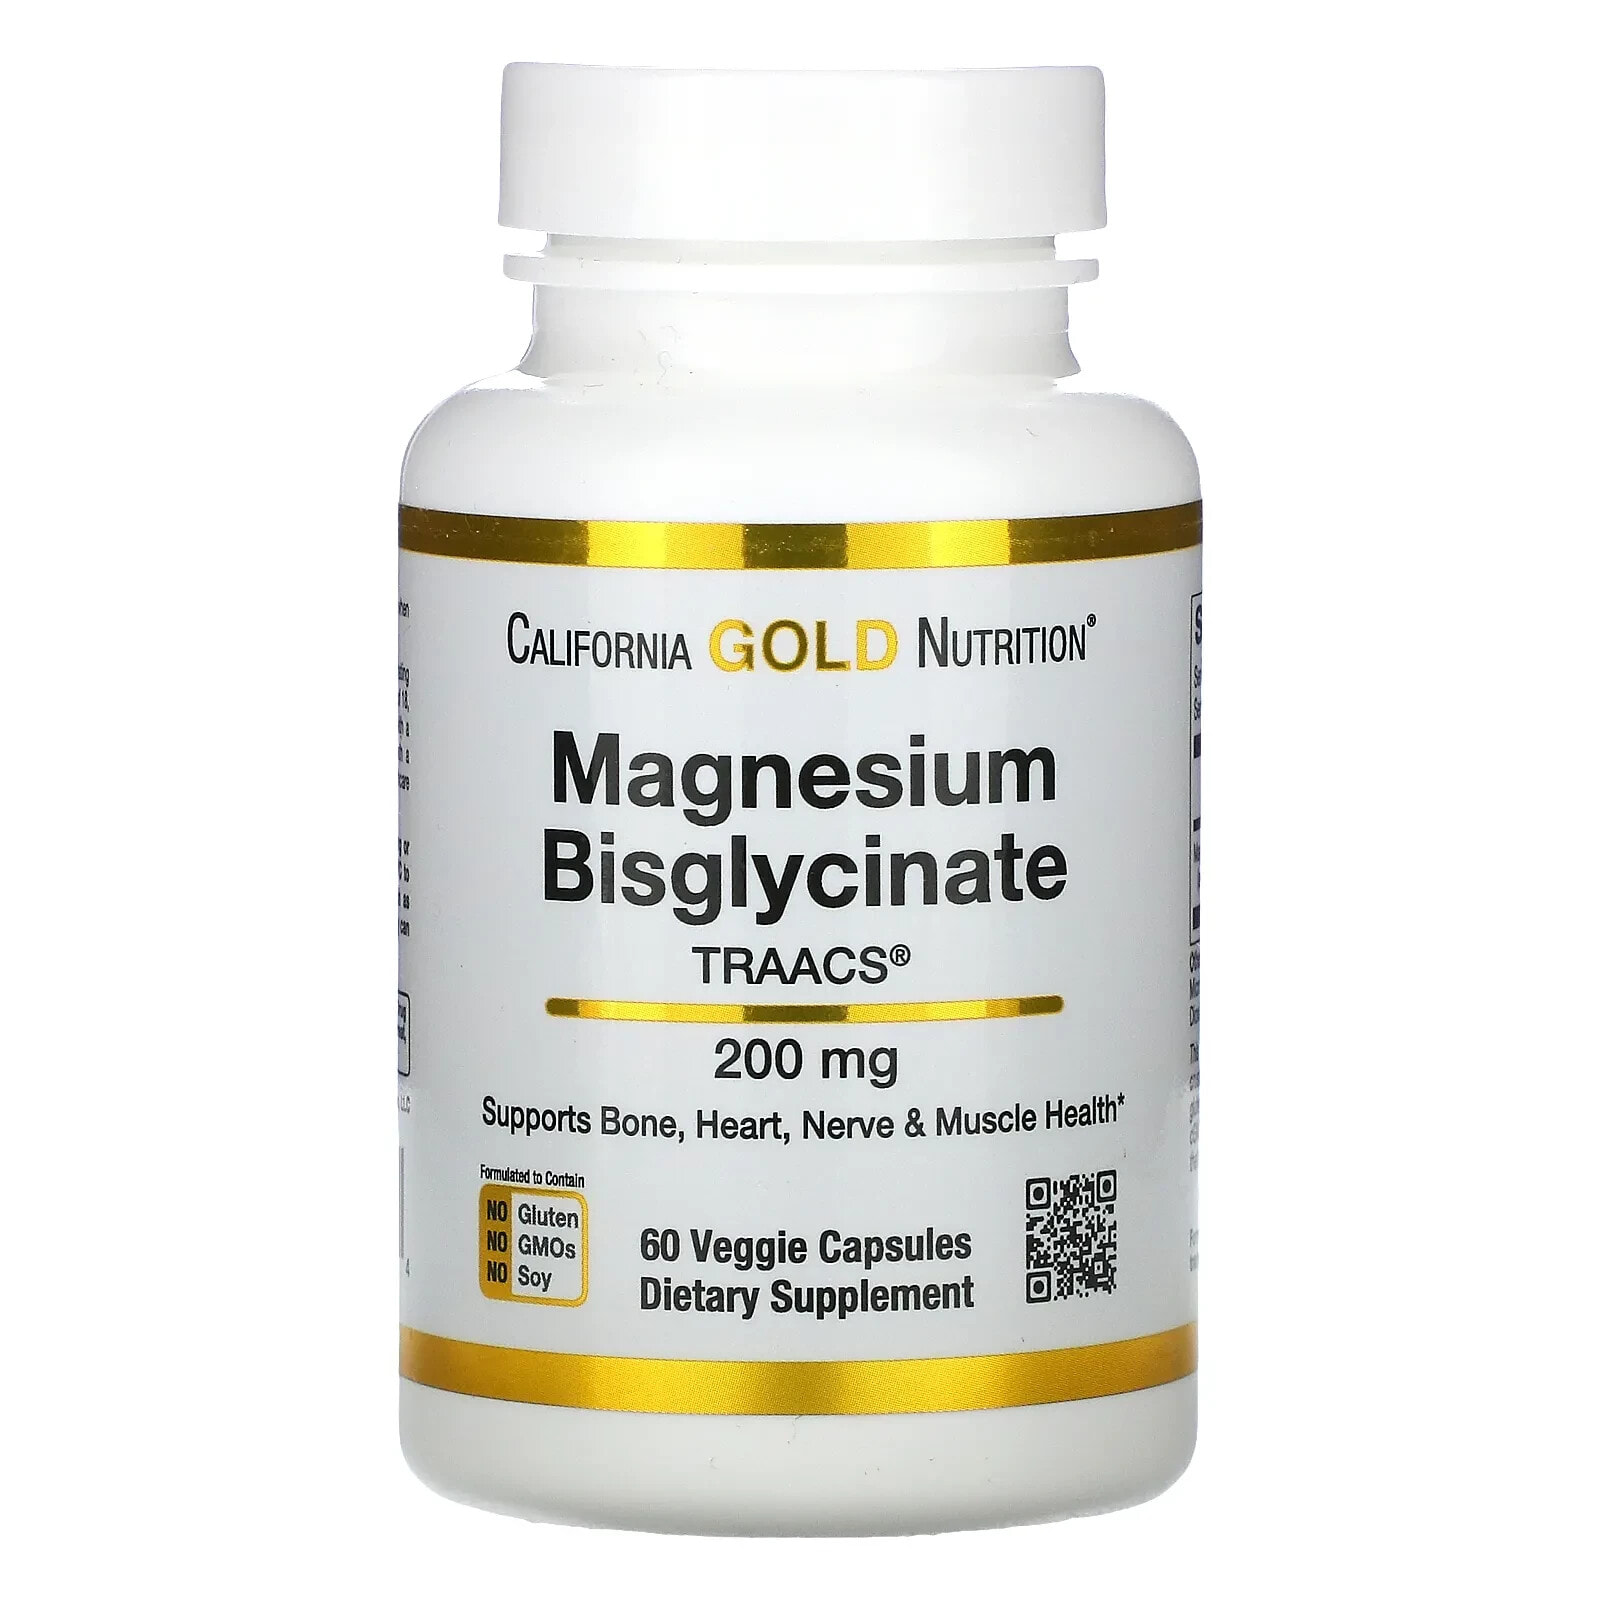 Magnesium Bisglycinate, Albion TRAACS, 200 mg, 60 Veggie Capsules (100 mg per Capsule)